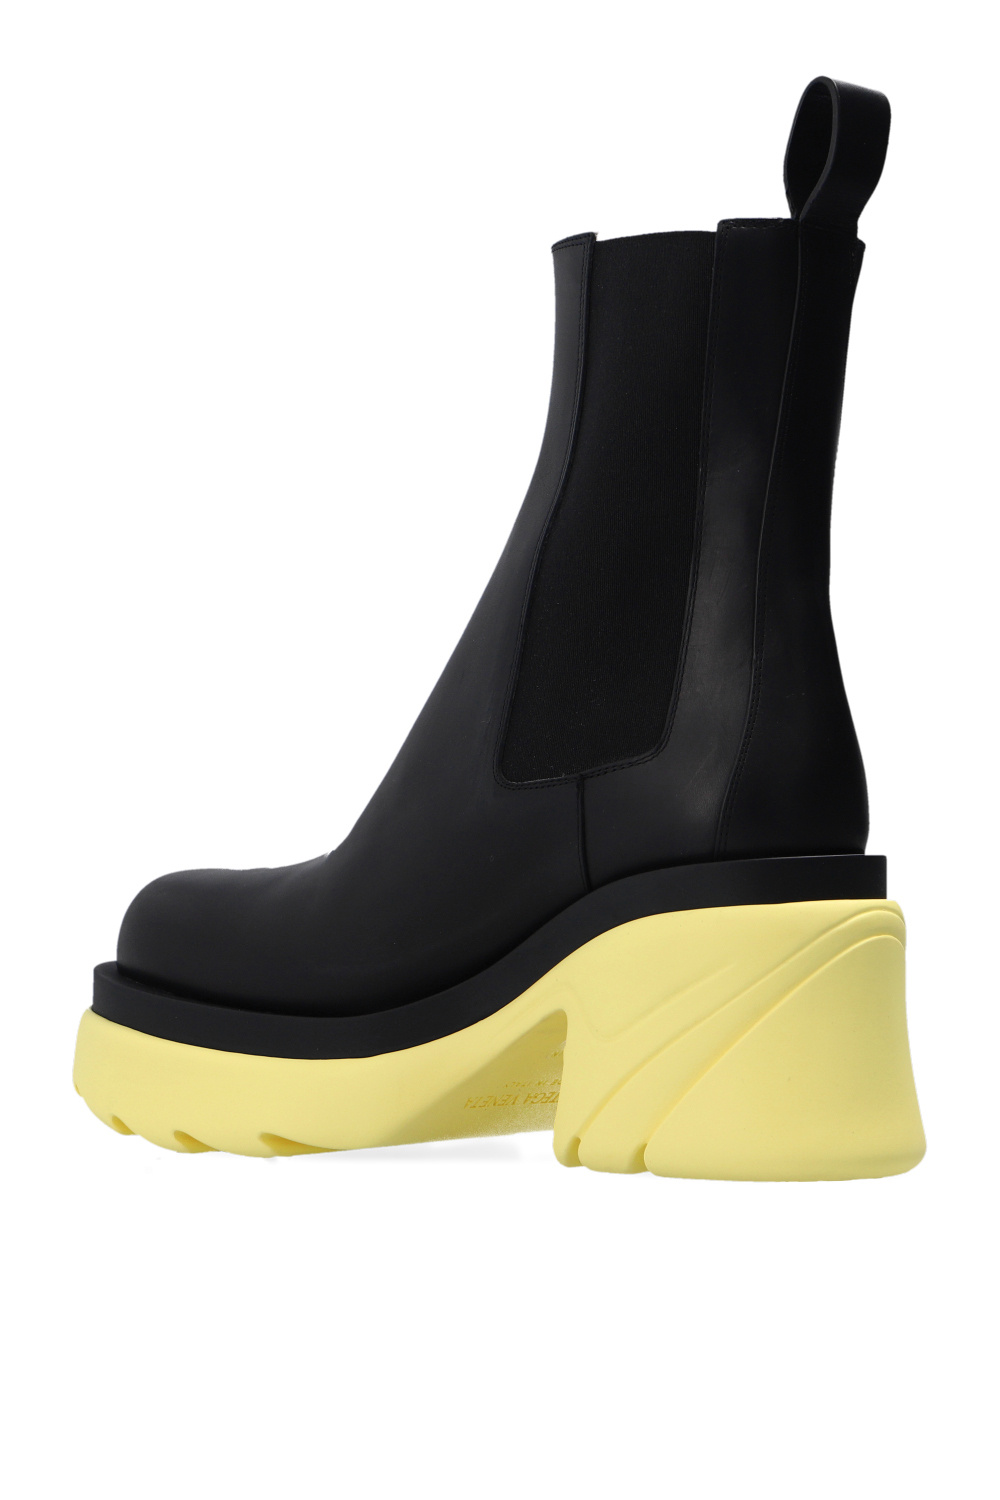 Bottega Veneta ‘Flash’ platform ankle boots